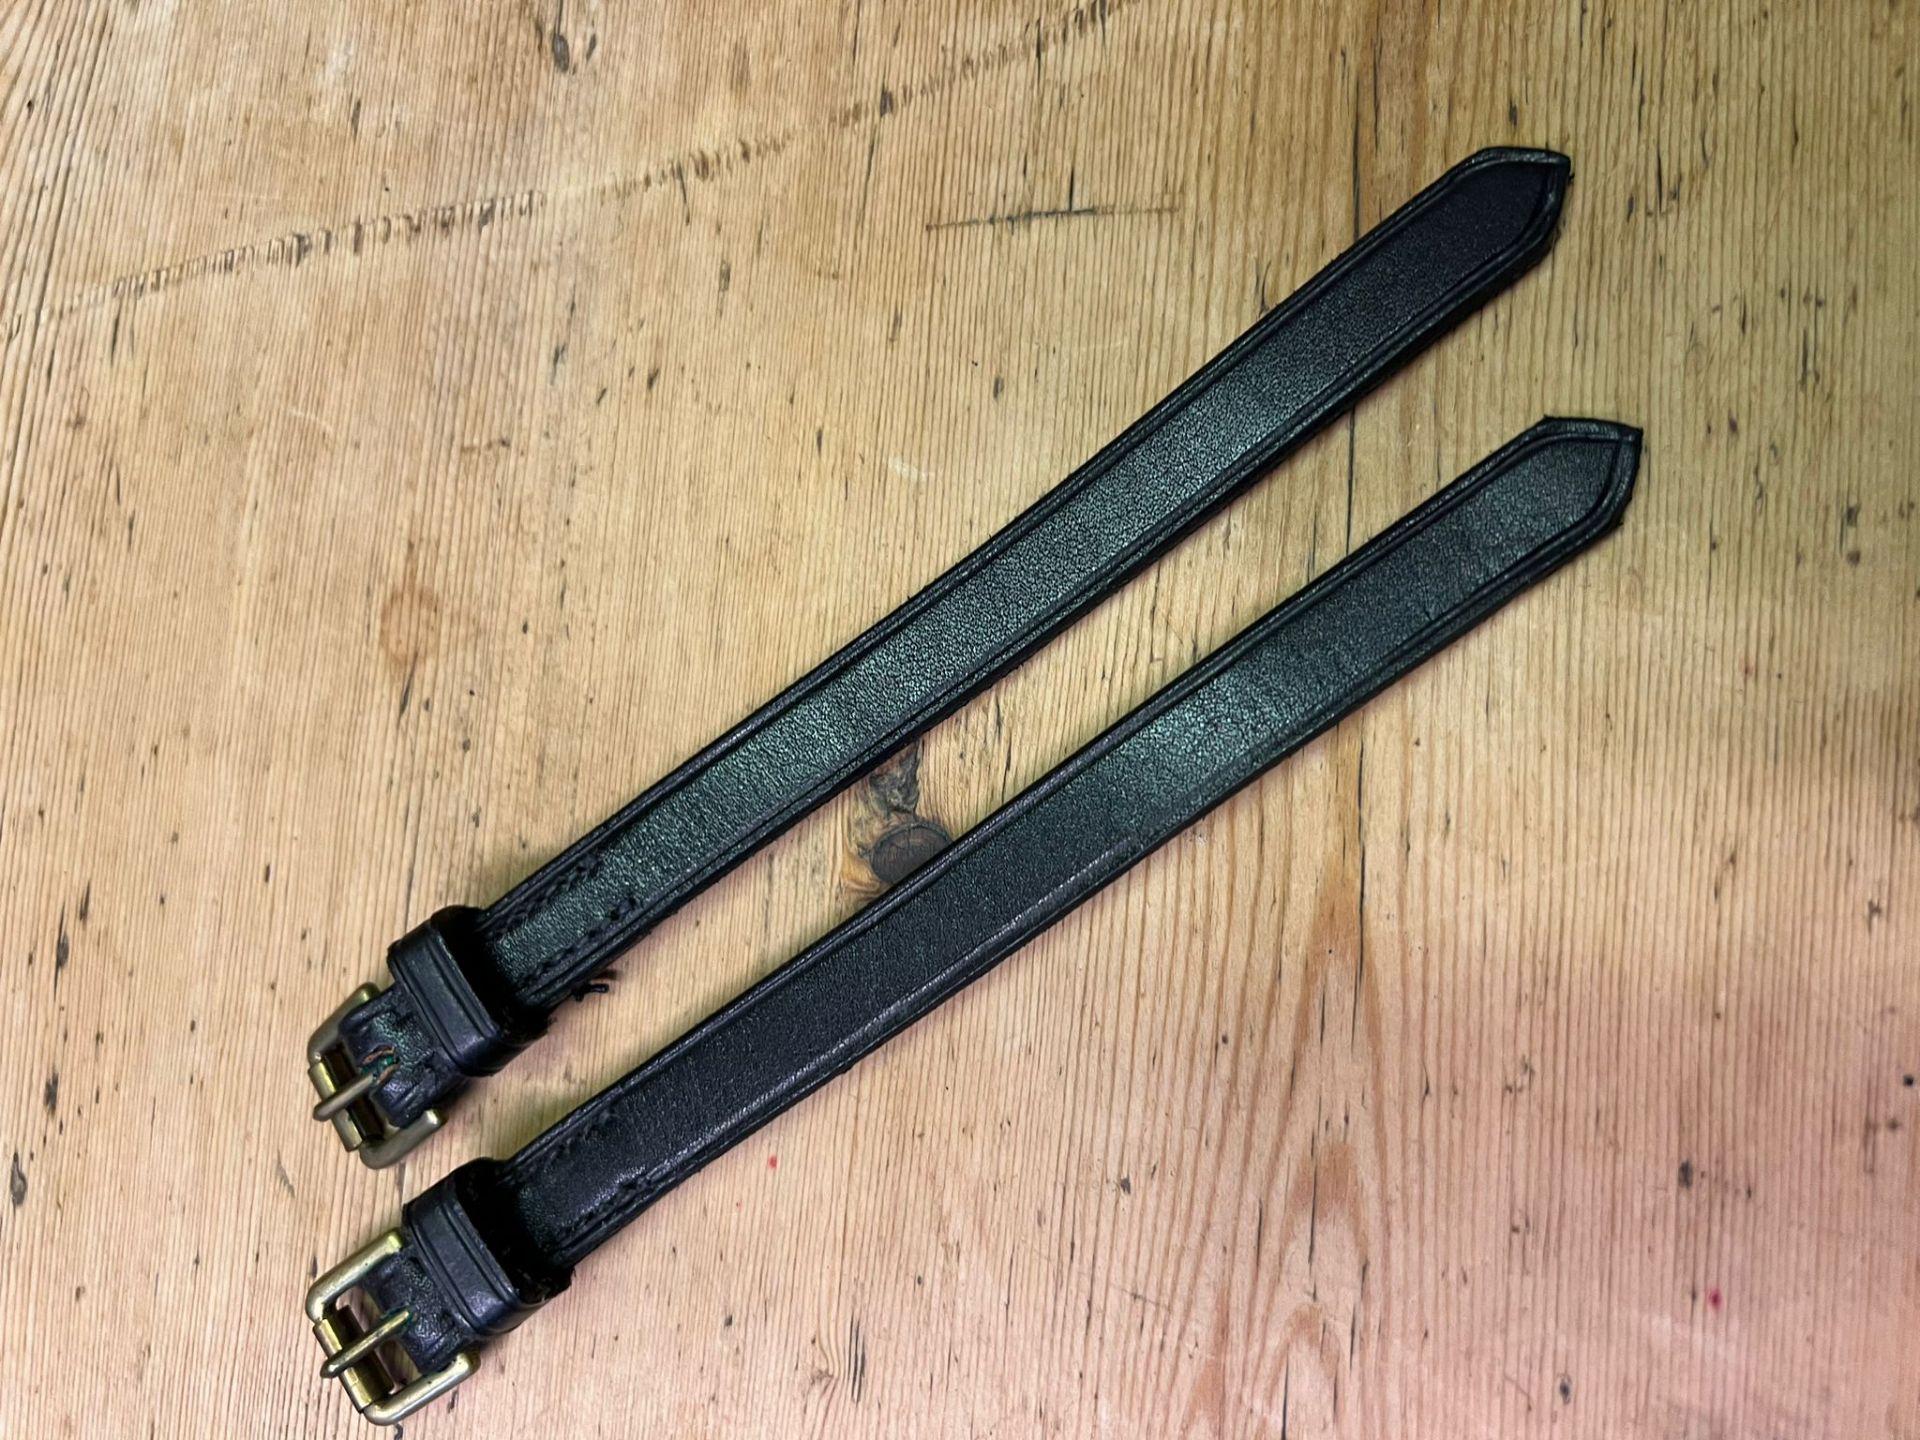 Pair of hame straps